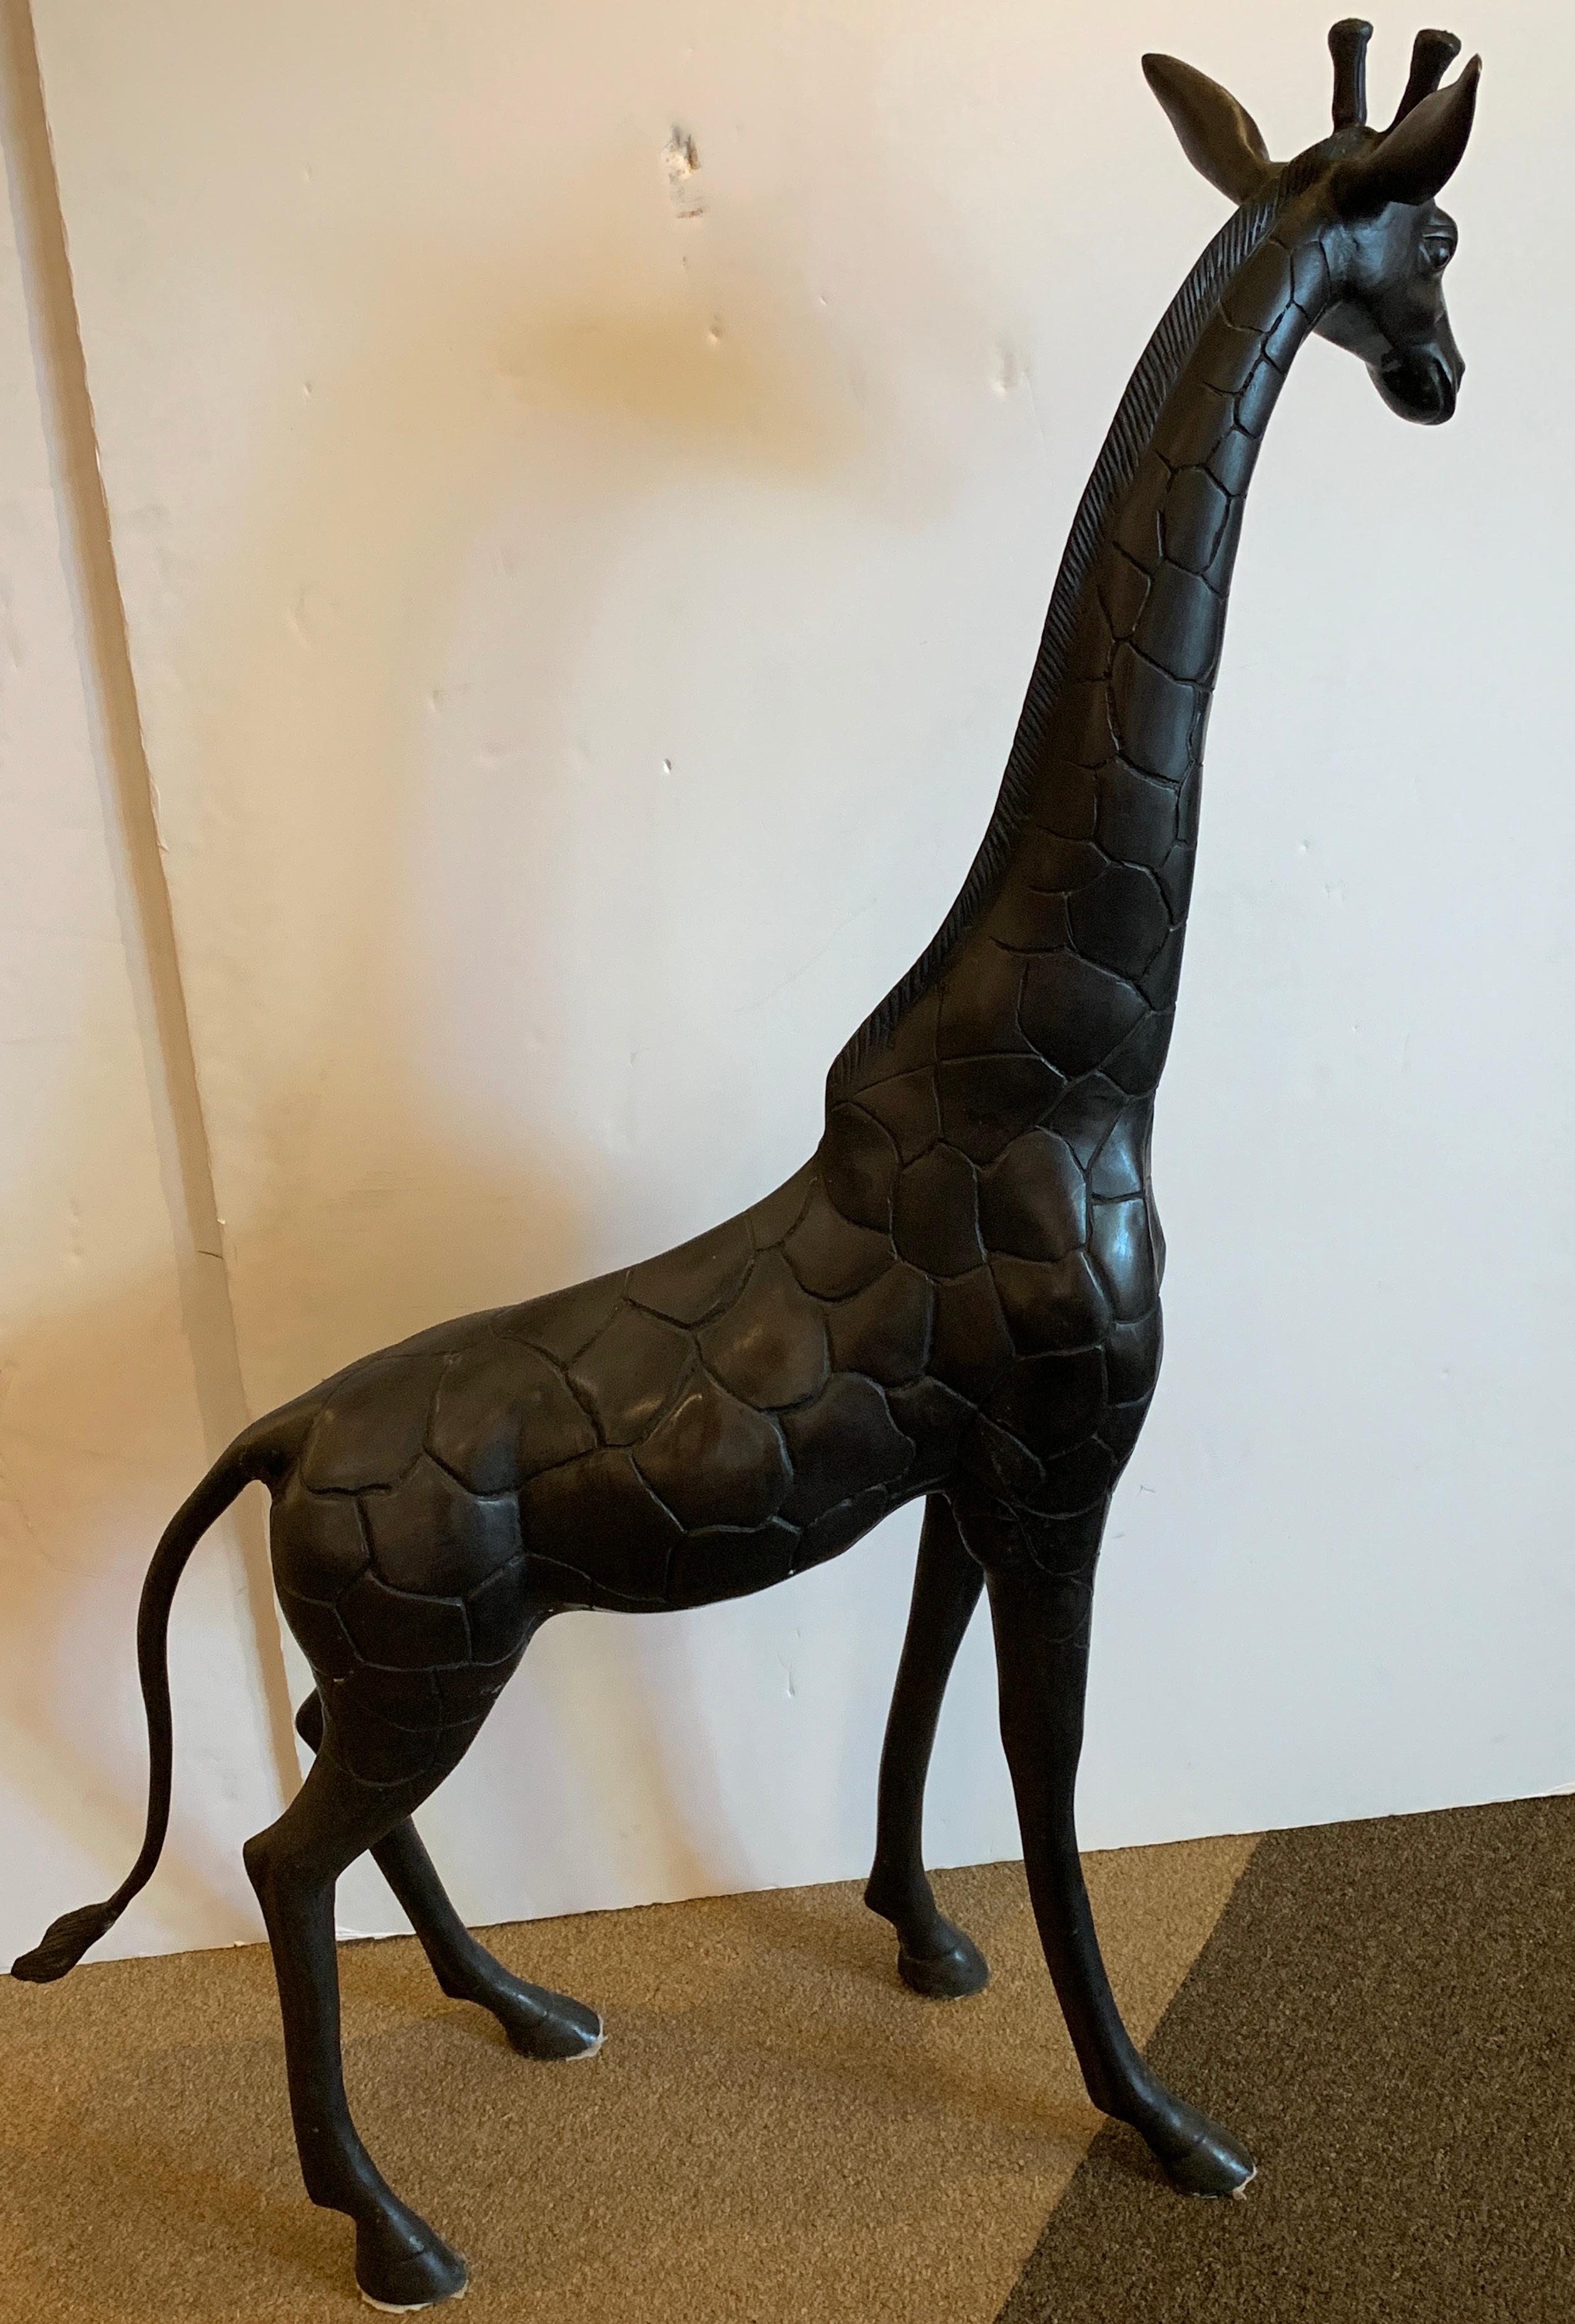 Two Large Bronze Sculptures of Giraffes 10